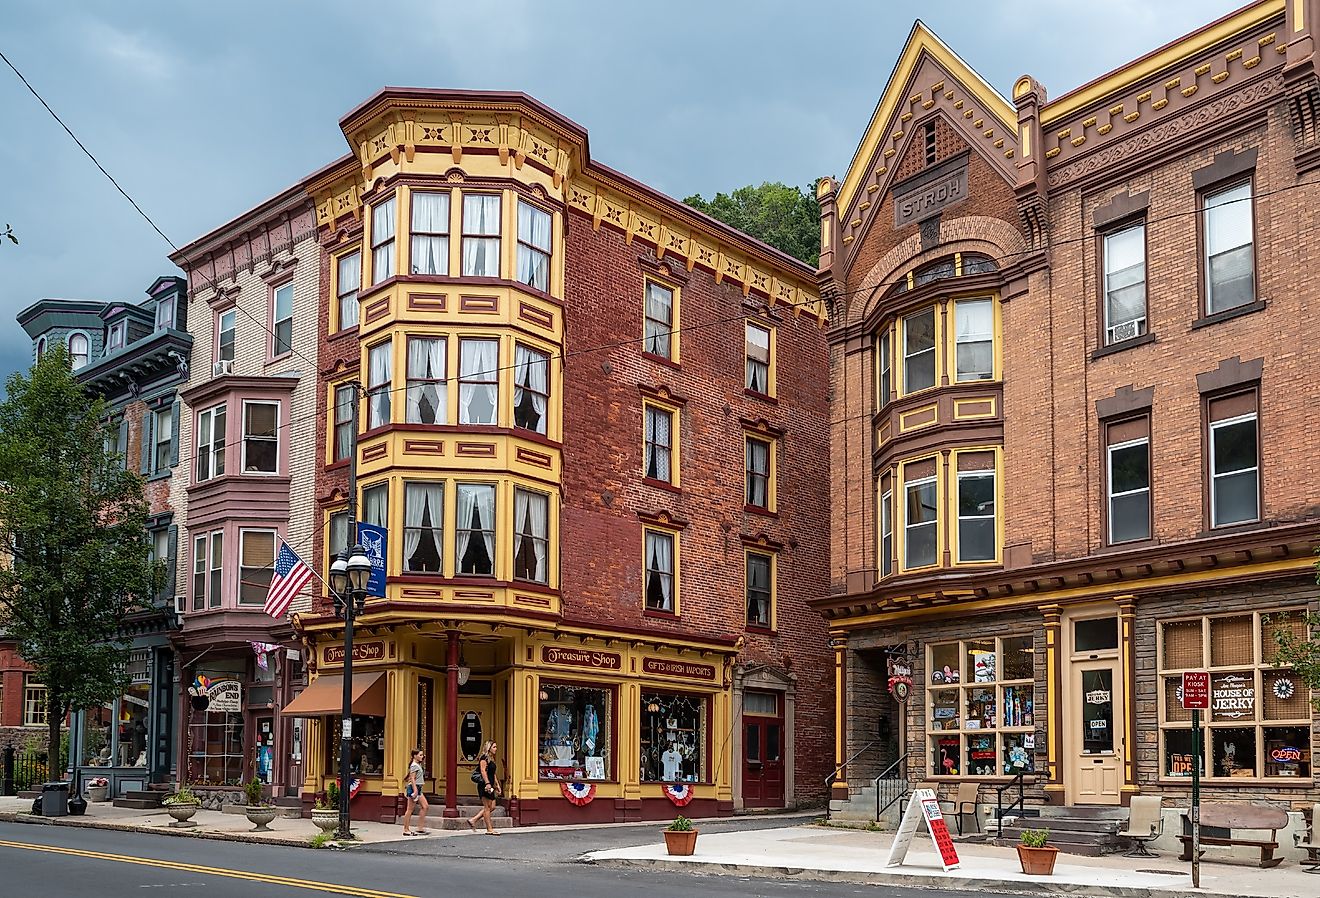 Historic streets of Jim Thorpe, Pennsylvania in the summer. Image credit Belikova Oksana via Shutterstock